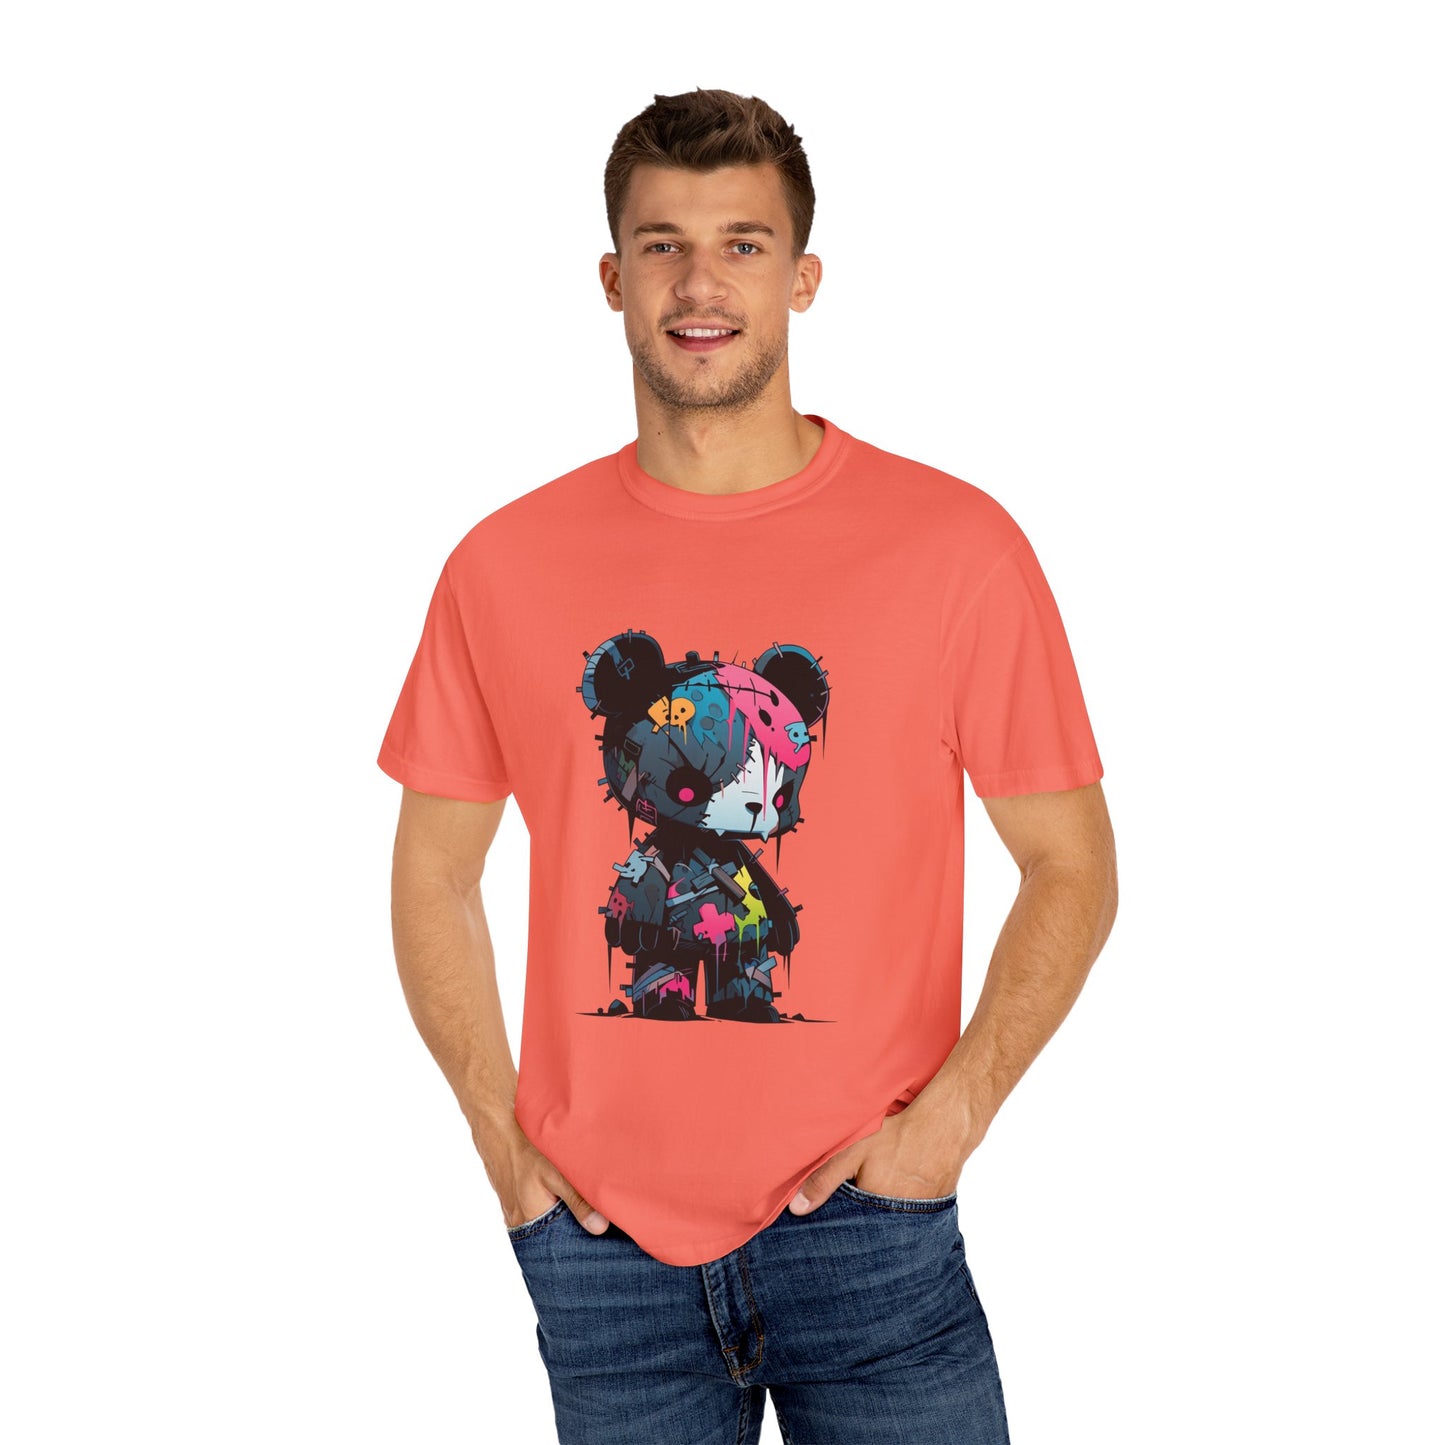 Hip Hop Teddy Bear Graphic Unisex Garment-dyed T-shirt Cotton Funny Humorous Graphic Soft Premium Unisex Men Women Bright Salmon T-shirt Birthday Gift-33